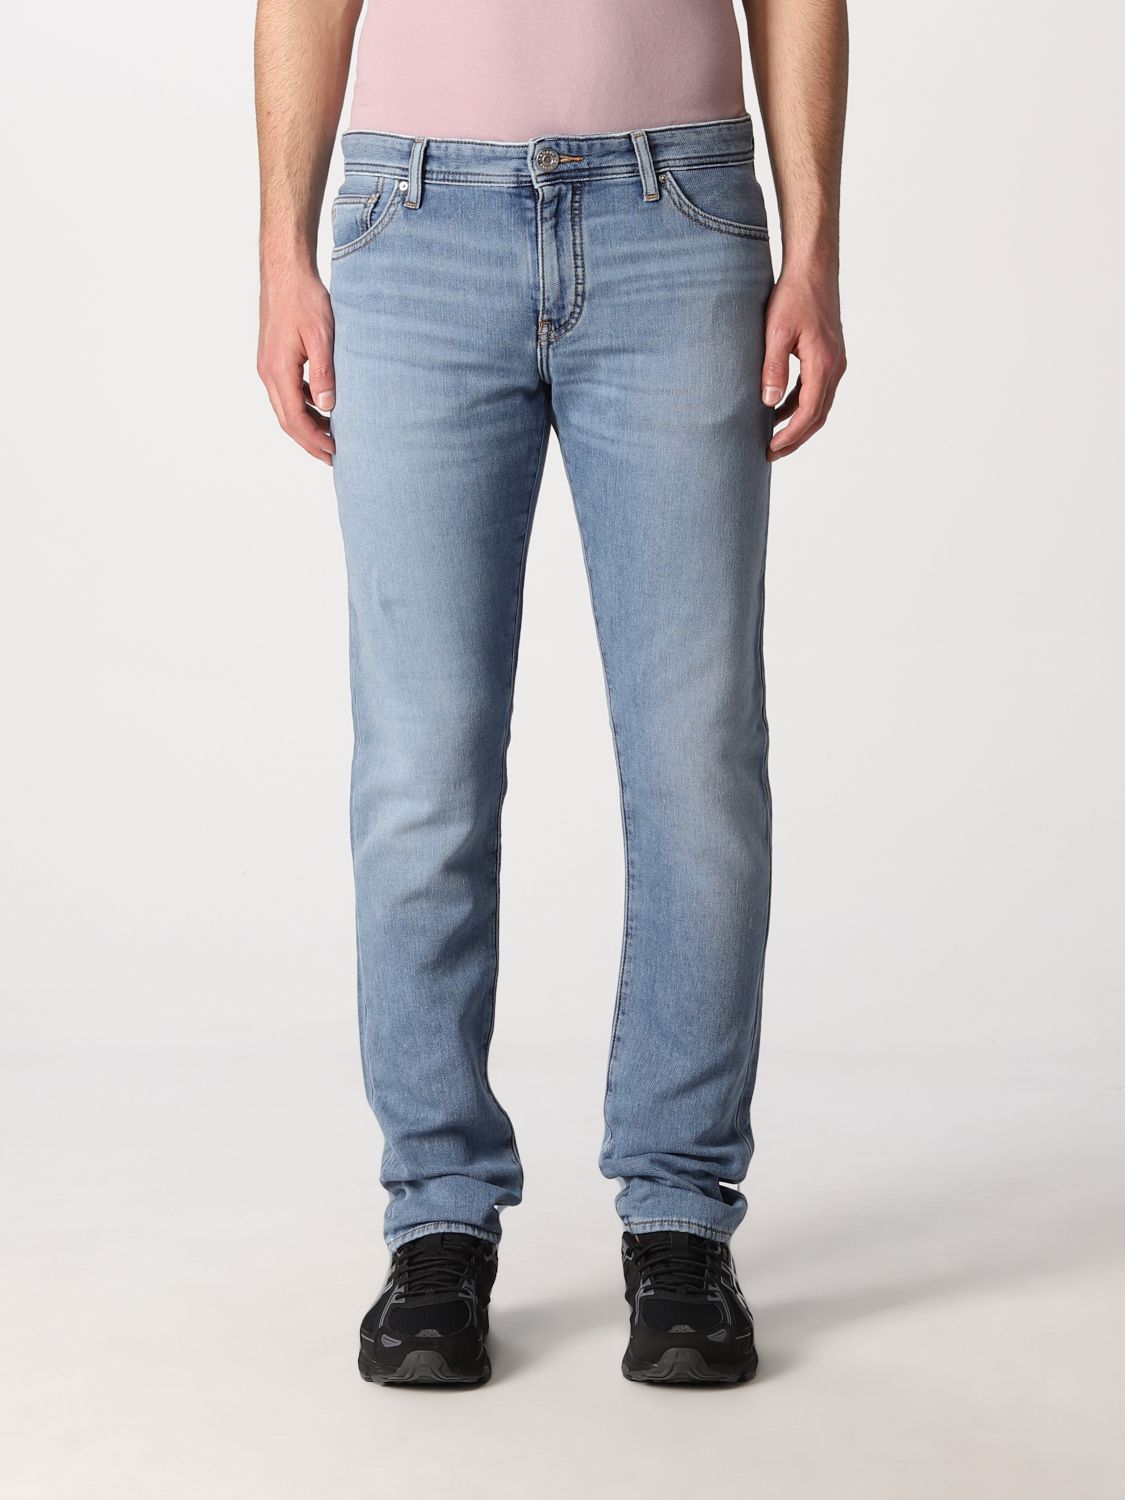 ARMANI EXCHANGE: skinny jeans - Stone Washed | Armani Exchange jeans ...